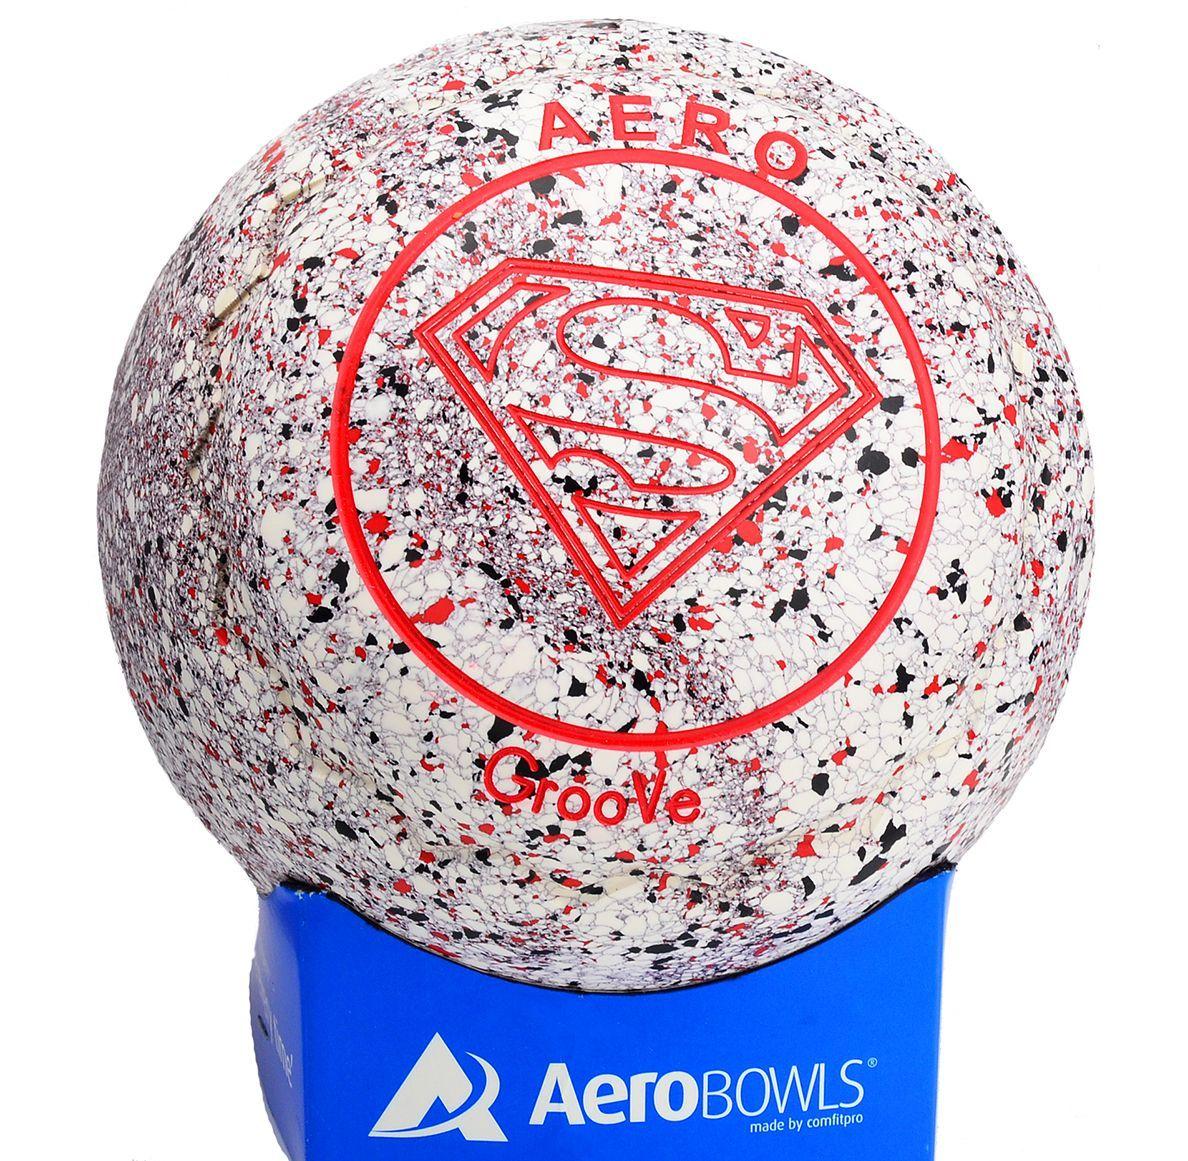 Sports Superman Logo - Aero GrooVe lawn bowl in Snow color with Superman logo. Lawn bowls